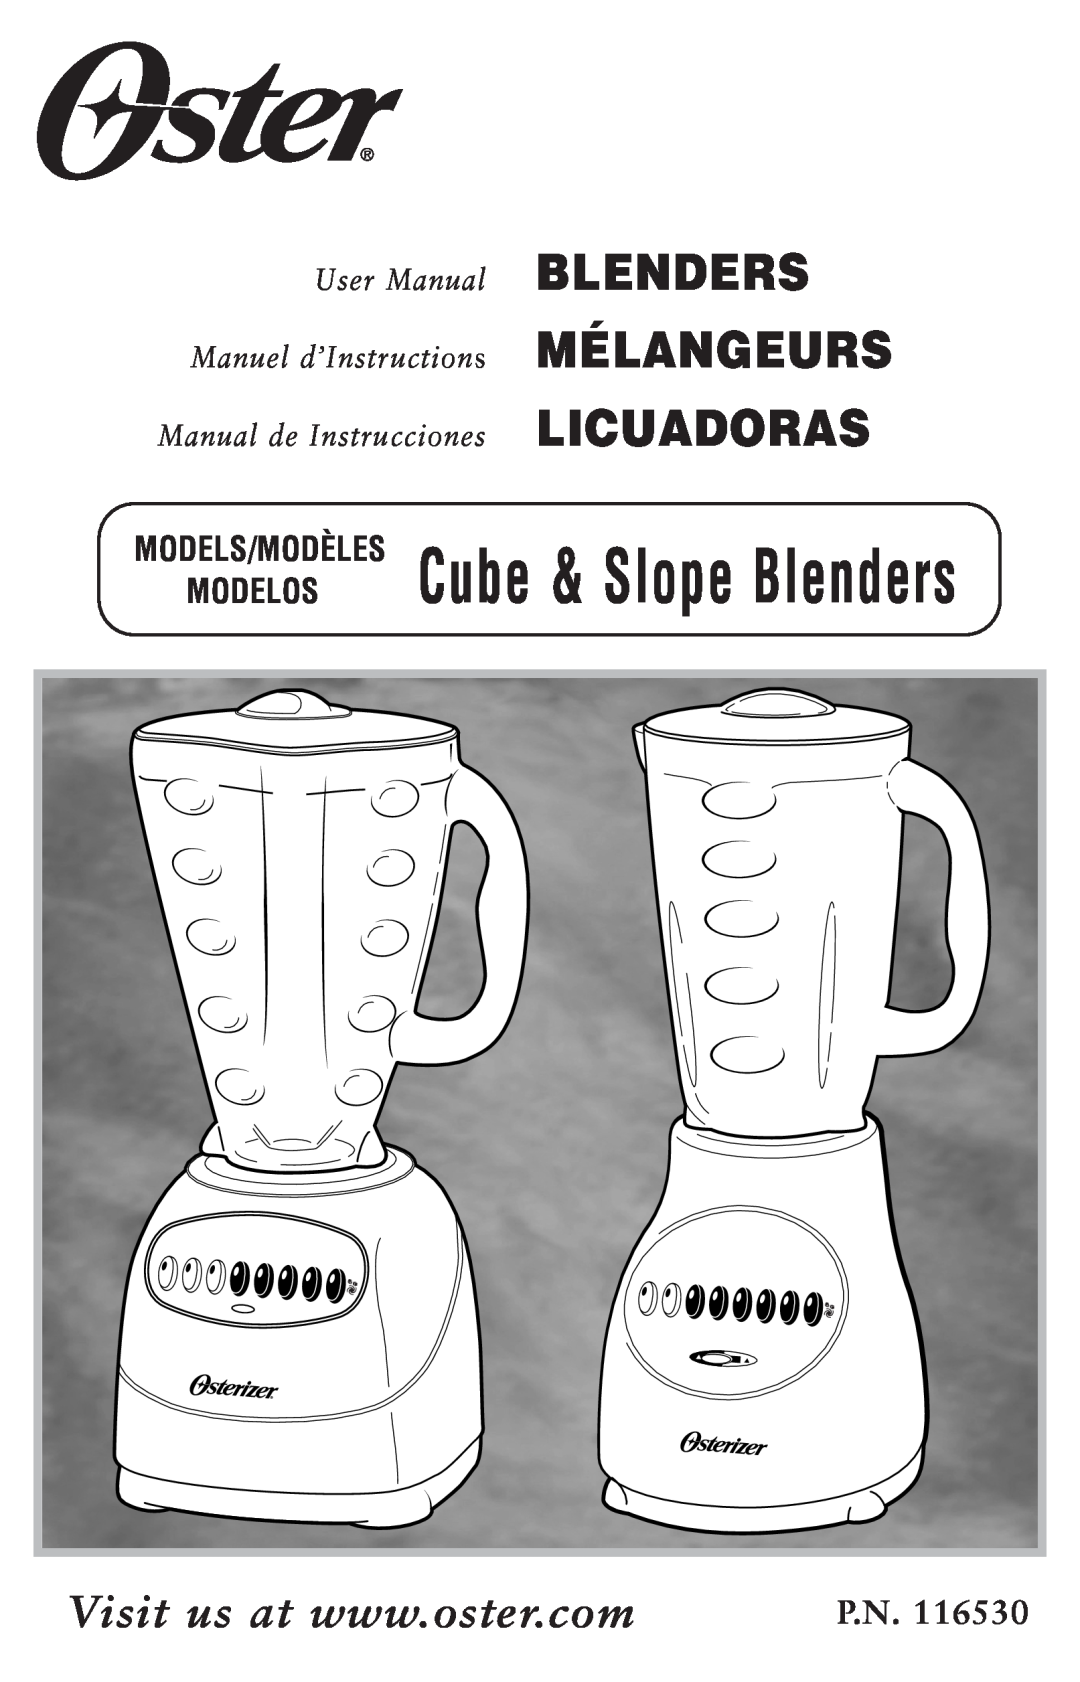 Oster 116530 user manual MODELOS Cube & Slope Blenders, Blenders Mélangeurs Licuadoras, Models/Modèles 